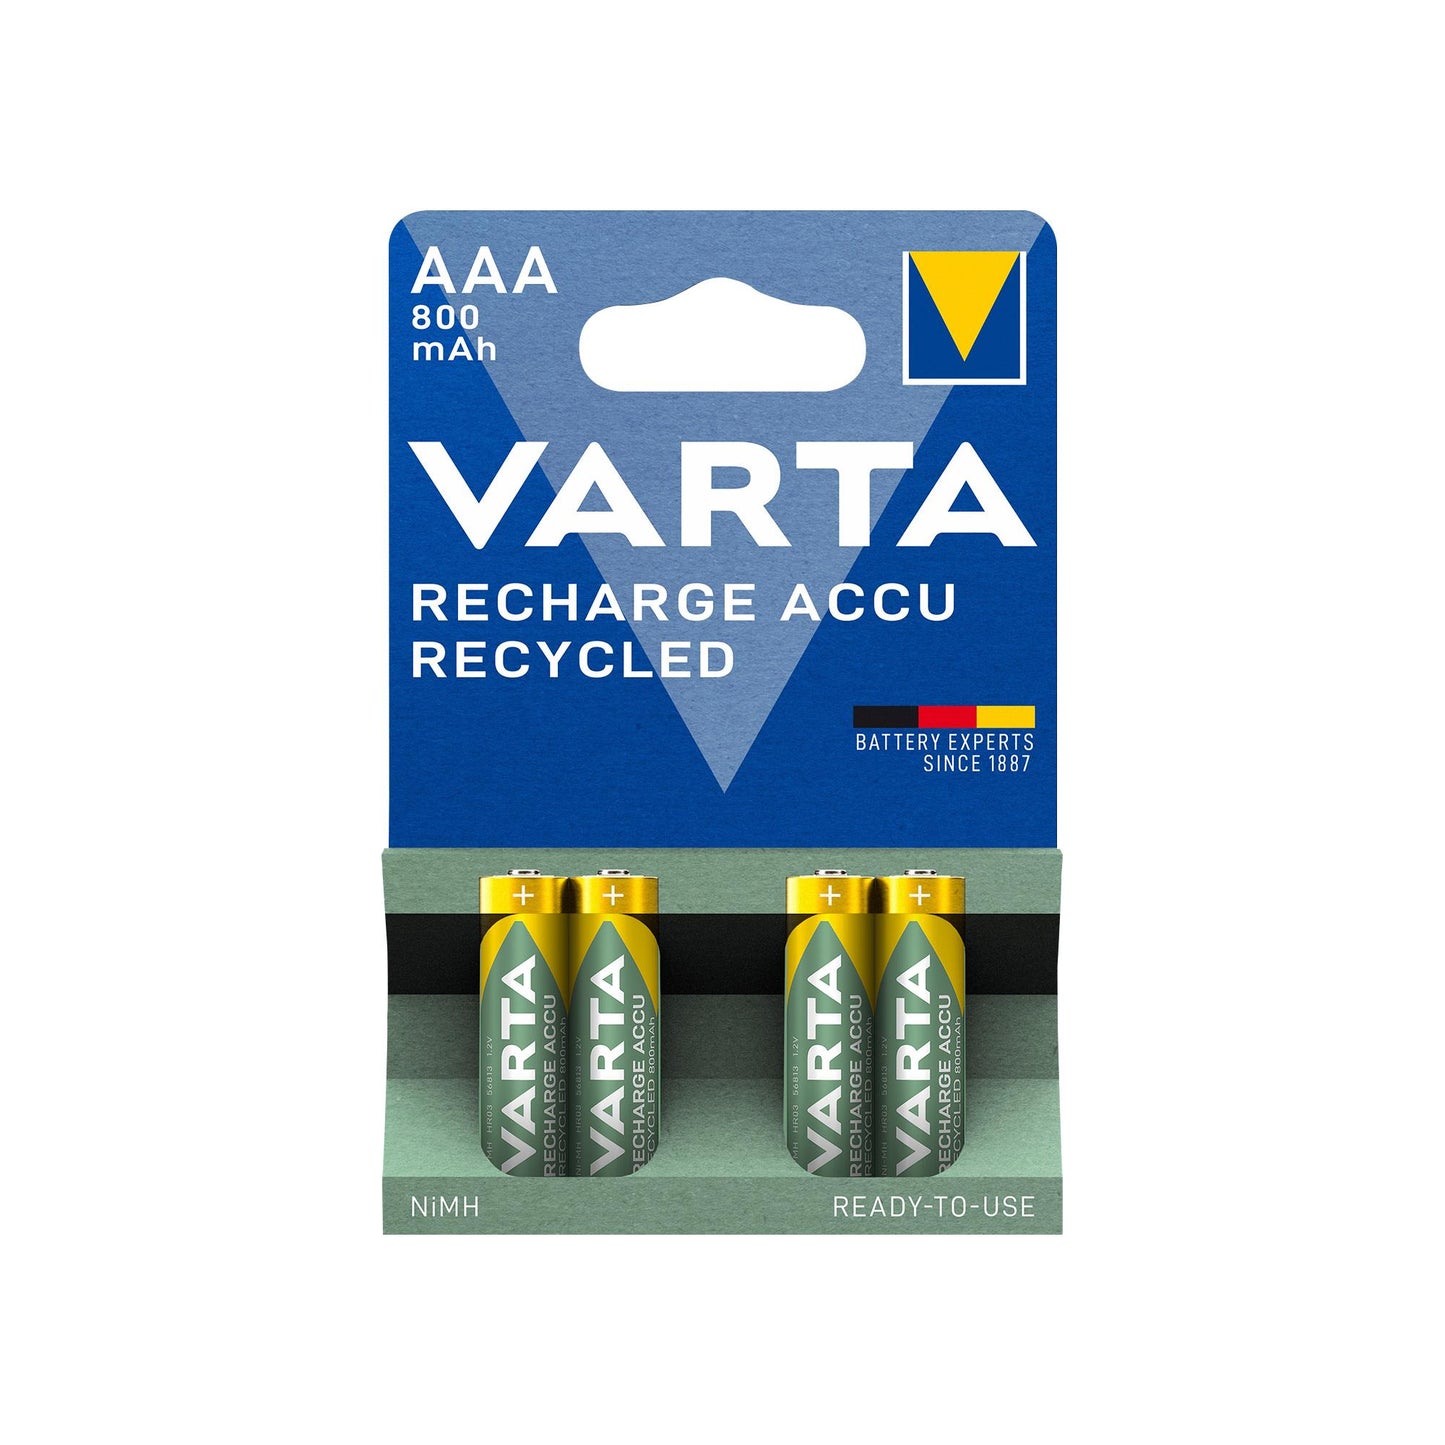 VARTA Akku NiMH Micro AAA HR03, 1.2V/800mAh Accu Recycled, Pre-charged, Retail Blister (4-Pack)